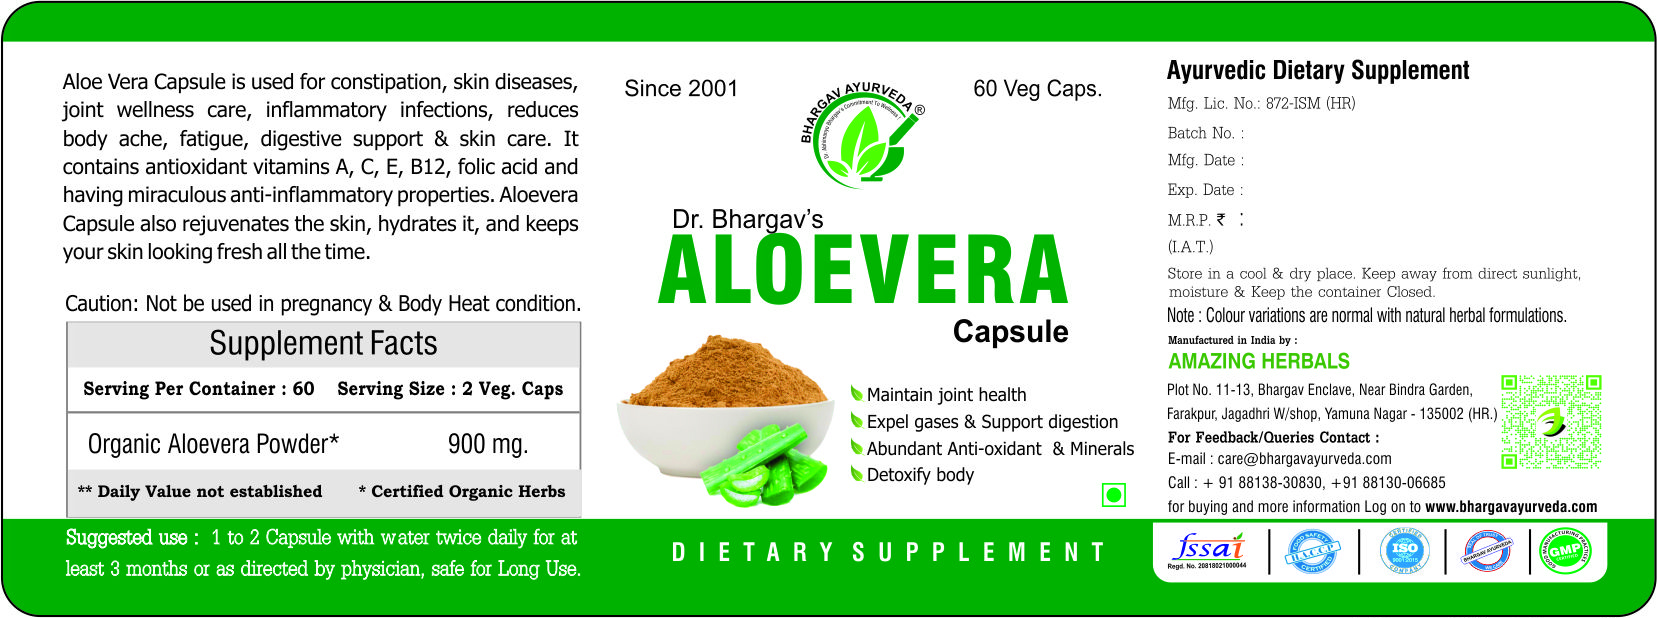 Buy Dr. Bhargav's Aloe vera Capsule- 60 cap at Best Price Online